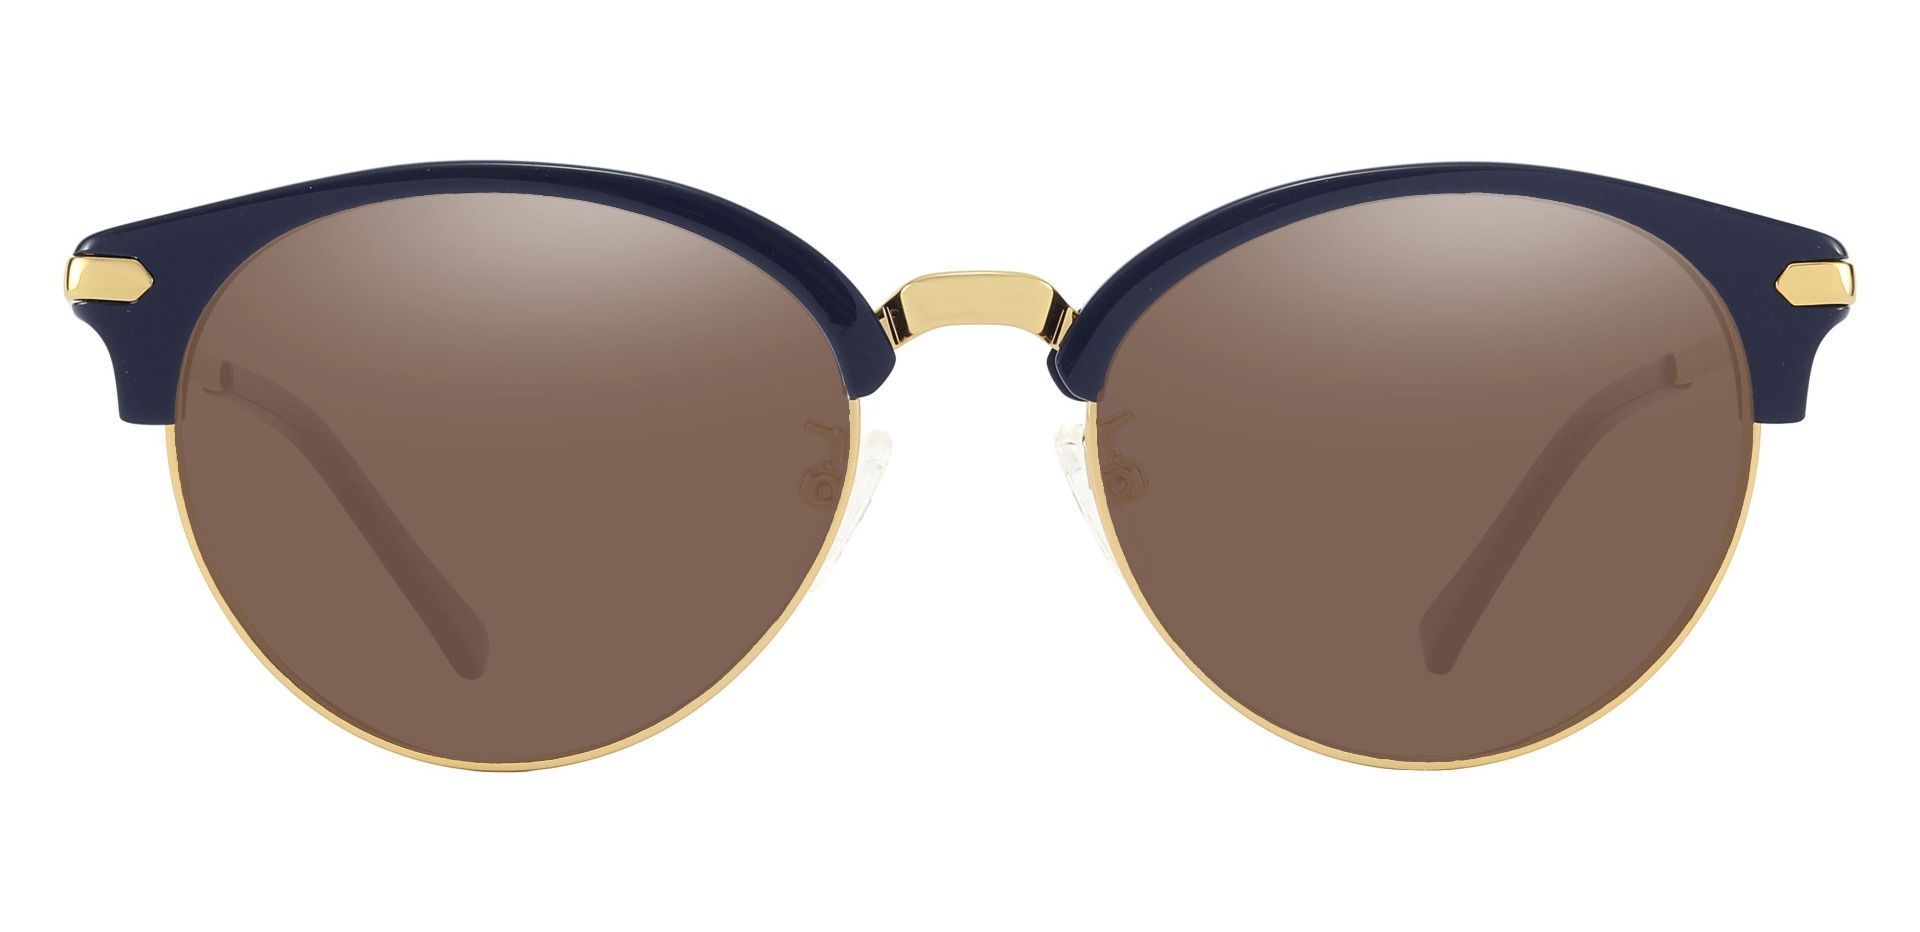 Catskill Browline Progressive Sunglasses - Blue Frame With Brown Lenses